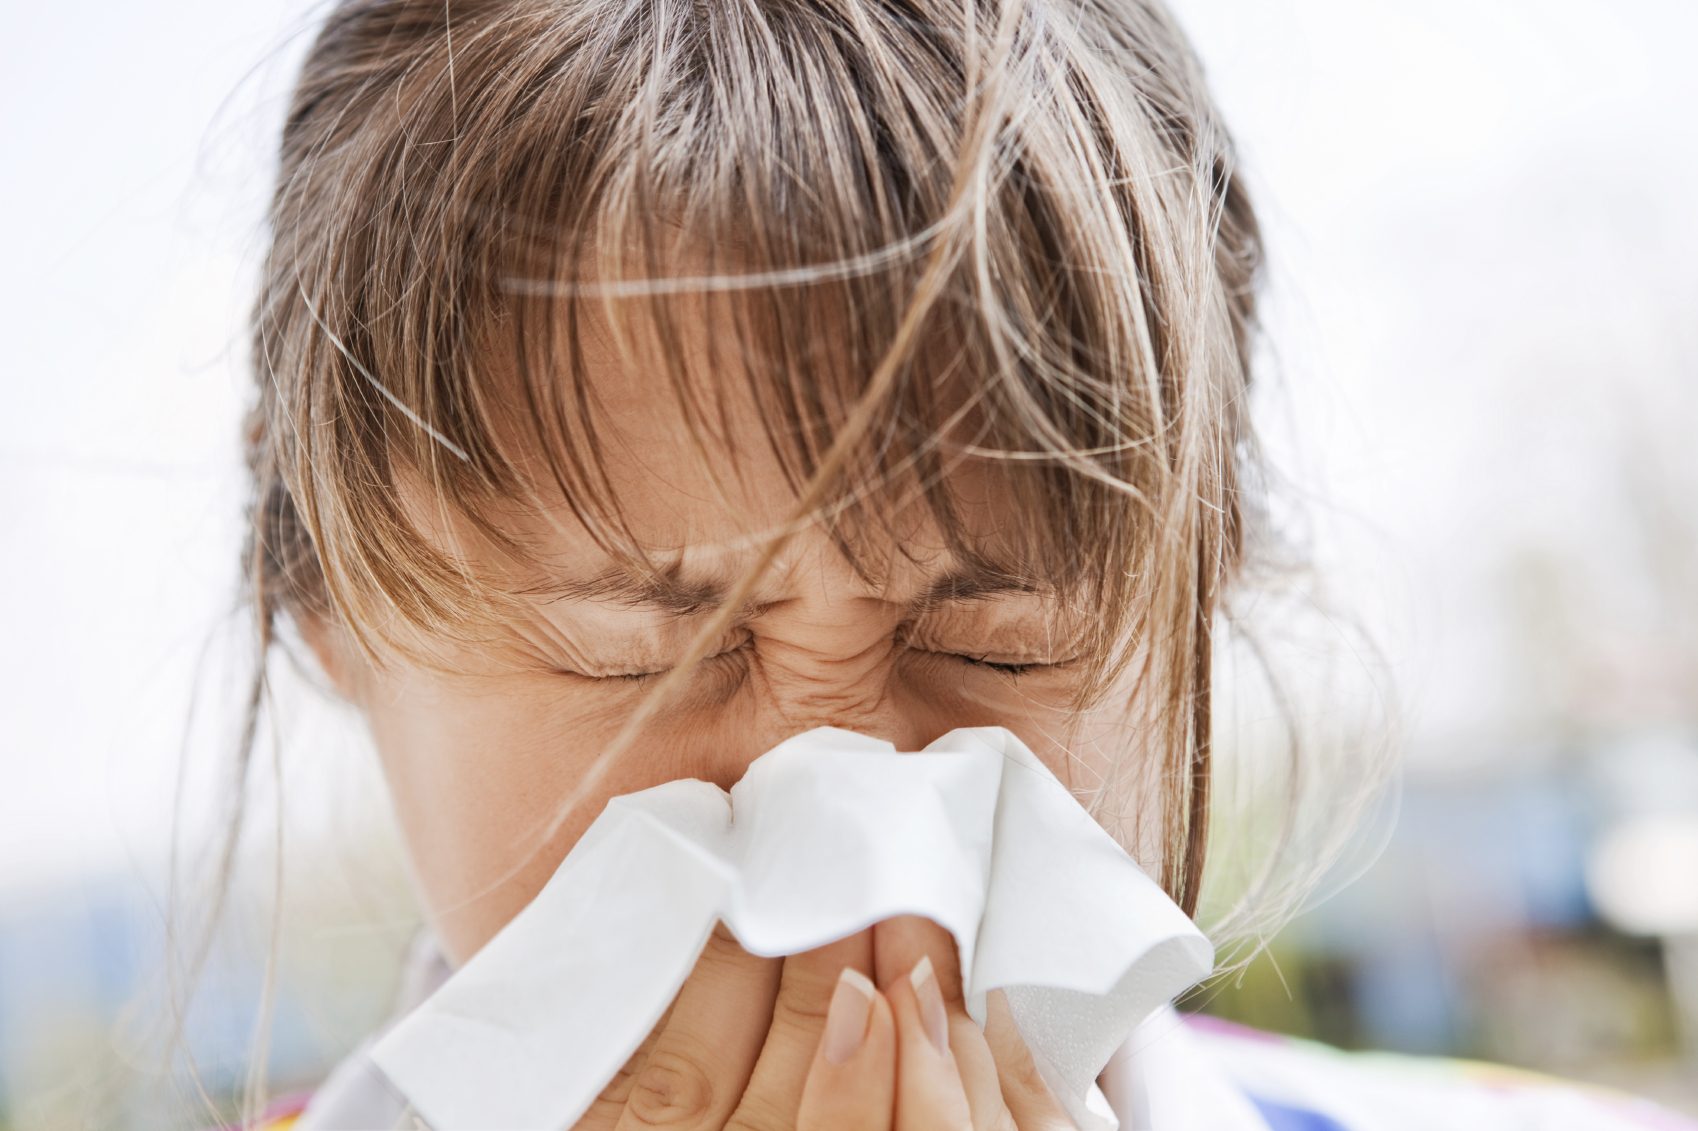 4 Ways to Get Rid of Allergies